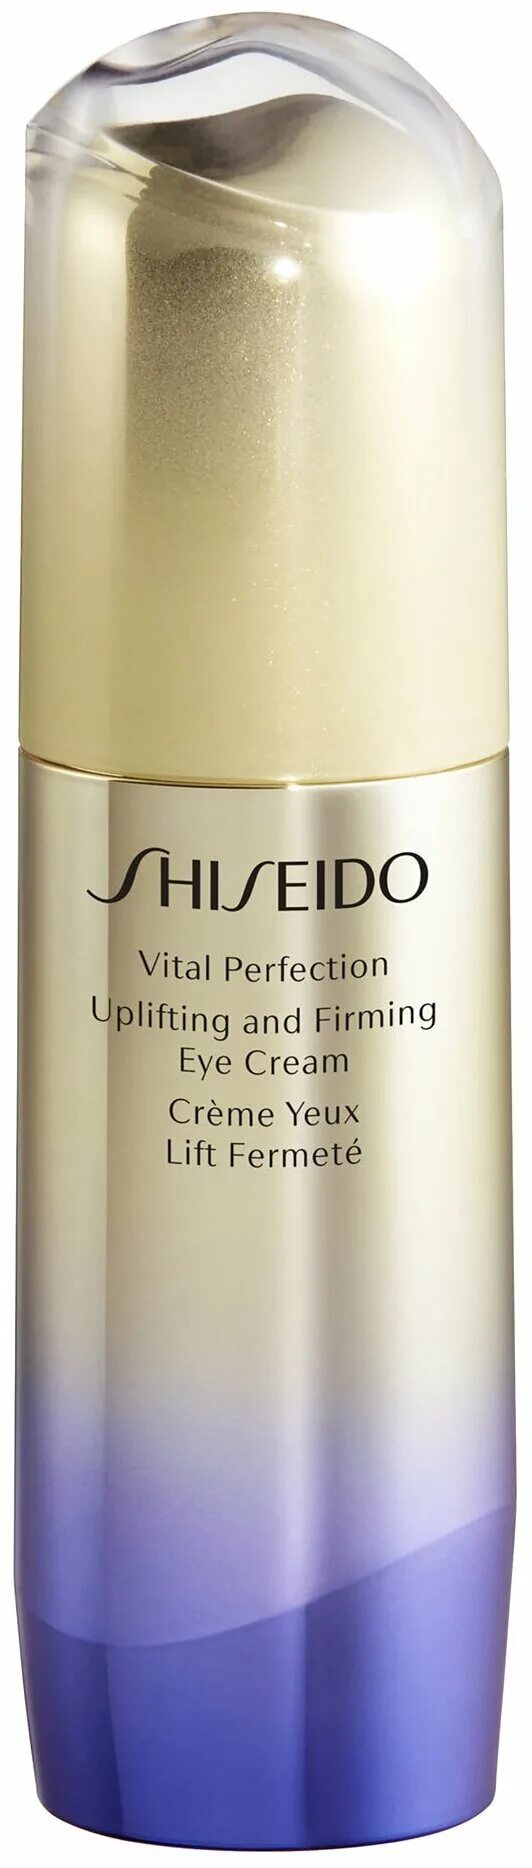 Shiseido vital perfection uplifting. Крем Shiseido Vital perfection. Шисейдо Vital perfection Uplifting. Shiseido Vital perfection Uplifting and Firming. Shiseido Vital perfection Uplifting and Firming Cream.